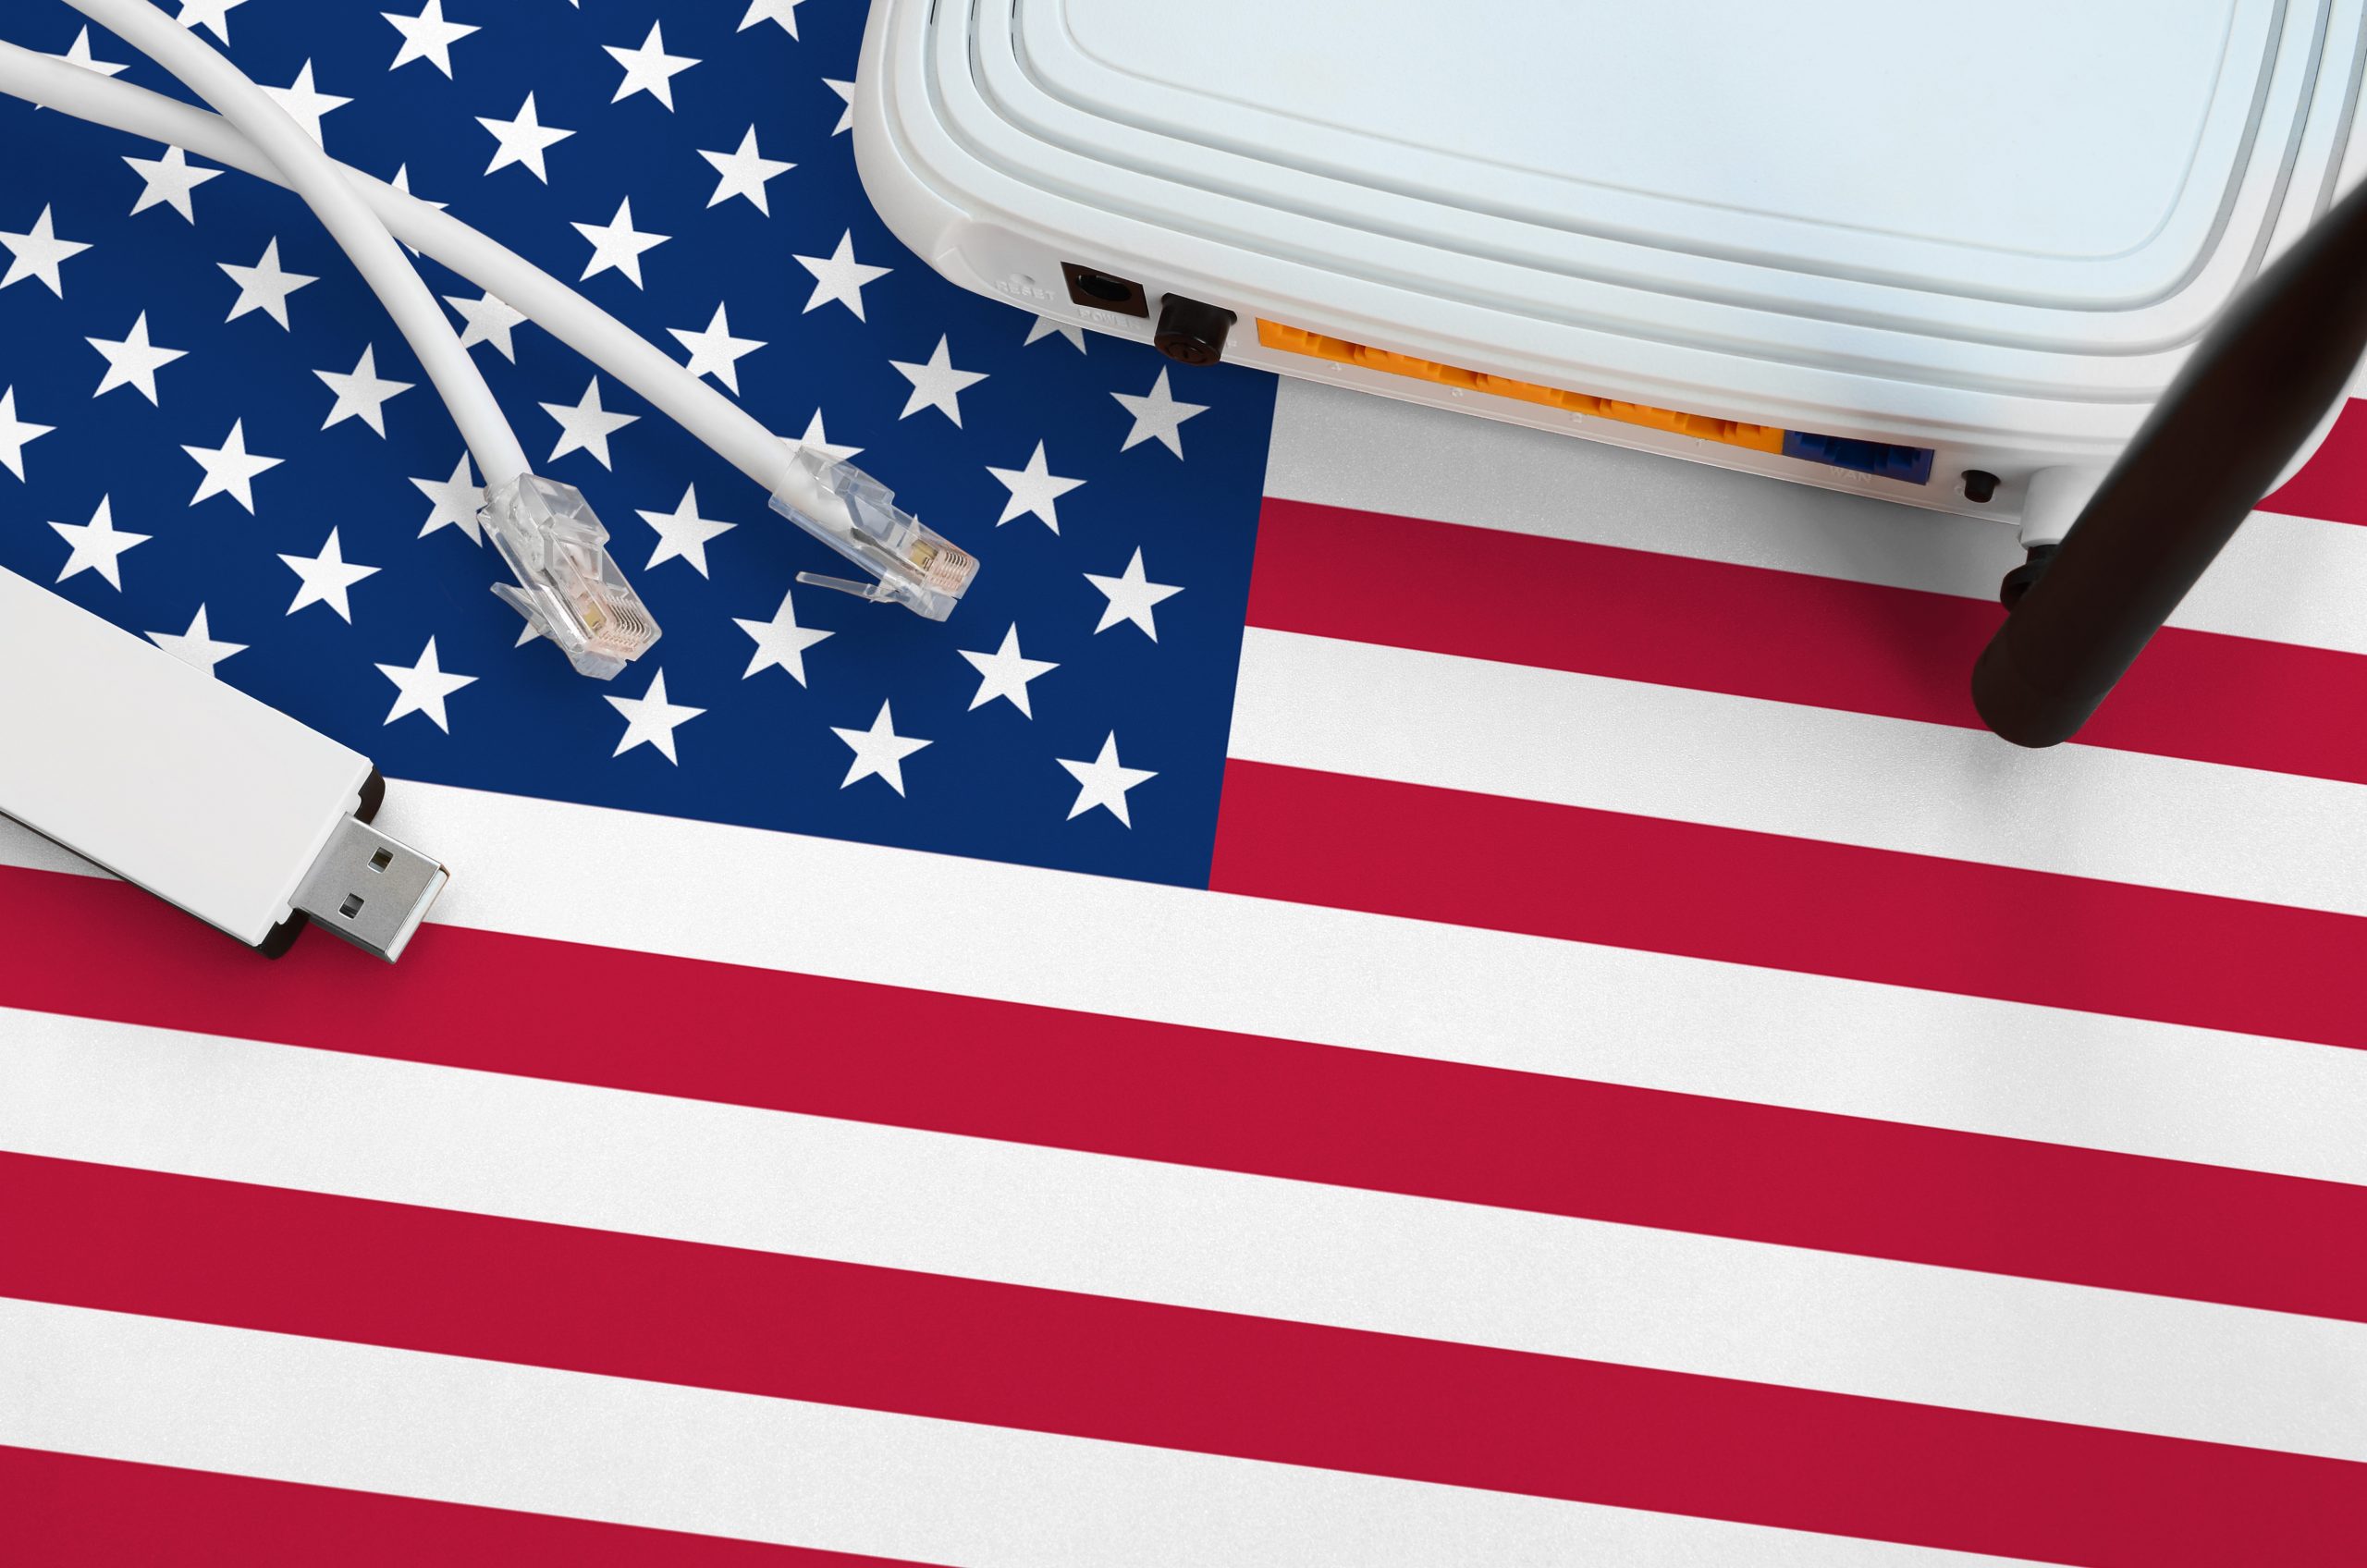 https://depositphotos.com/326829654/stock-photo-united-states-america-flag-depicted.html